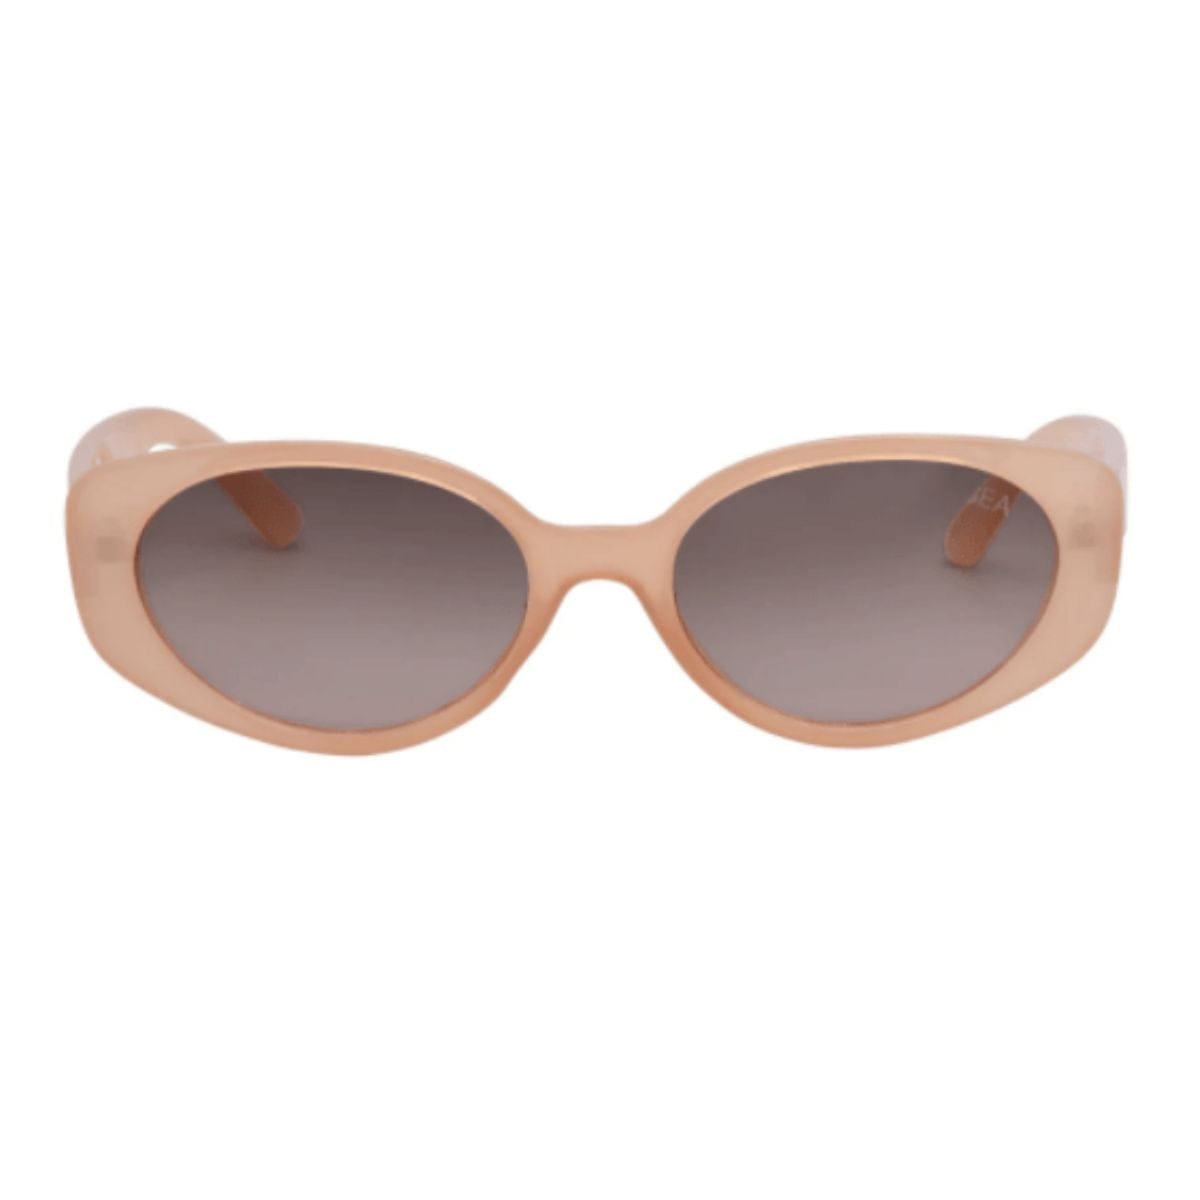 Marley Sunglasses (Blush/Peach)